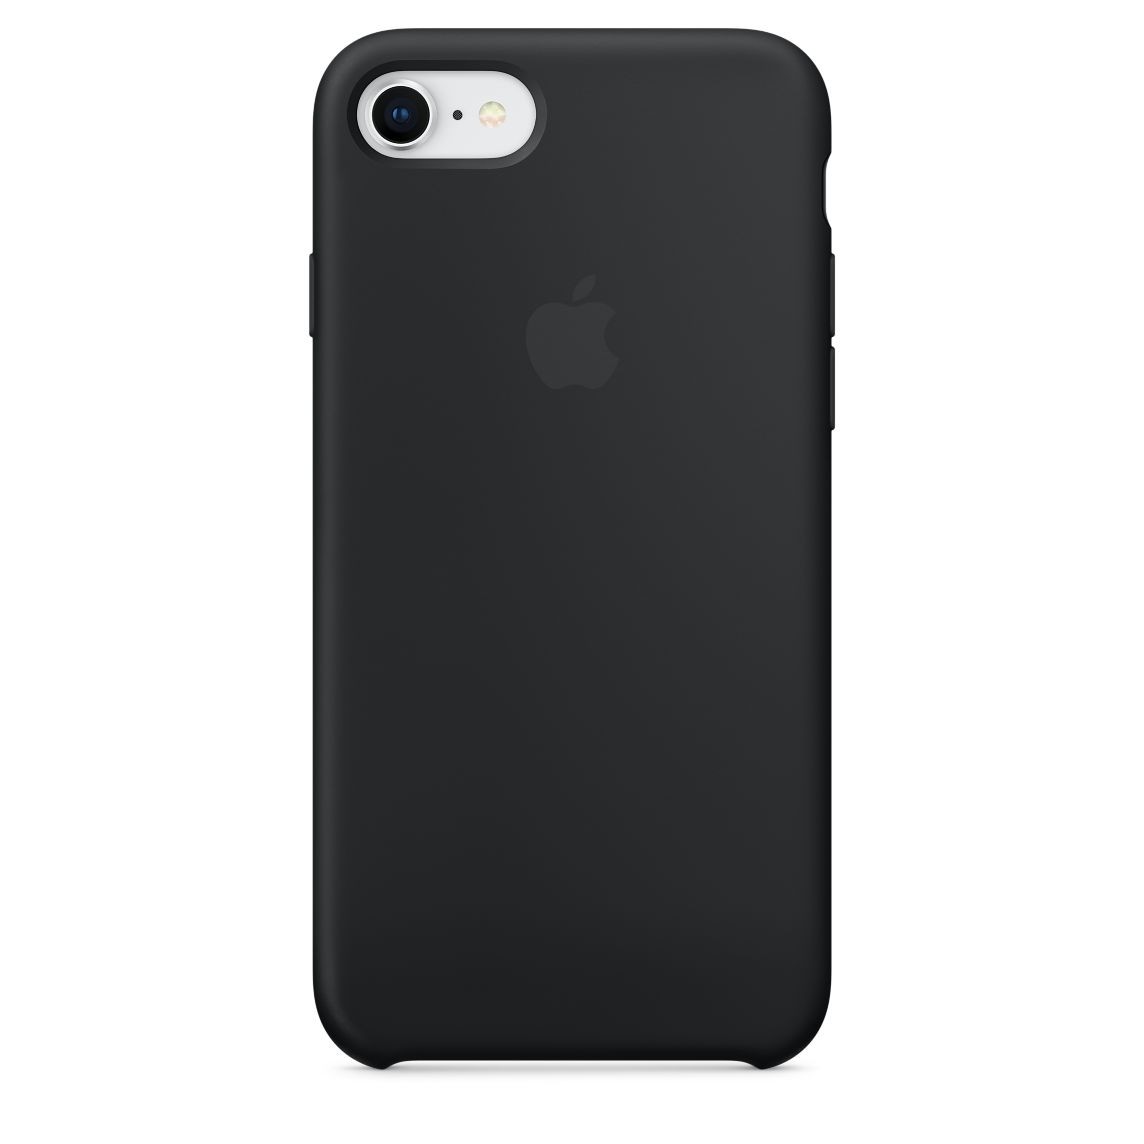 Mqgk2zm/a Apple Hintere Abdeckung Für Mobiltelefon Silikon ~d~